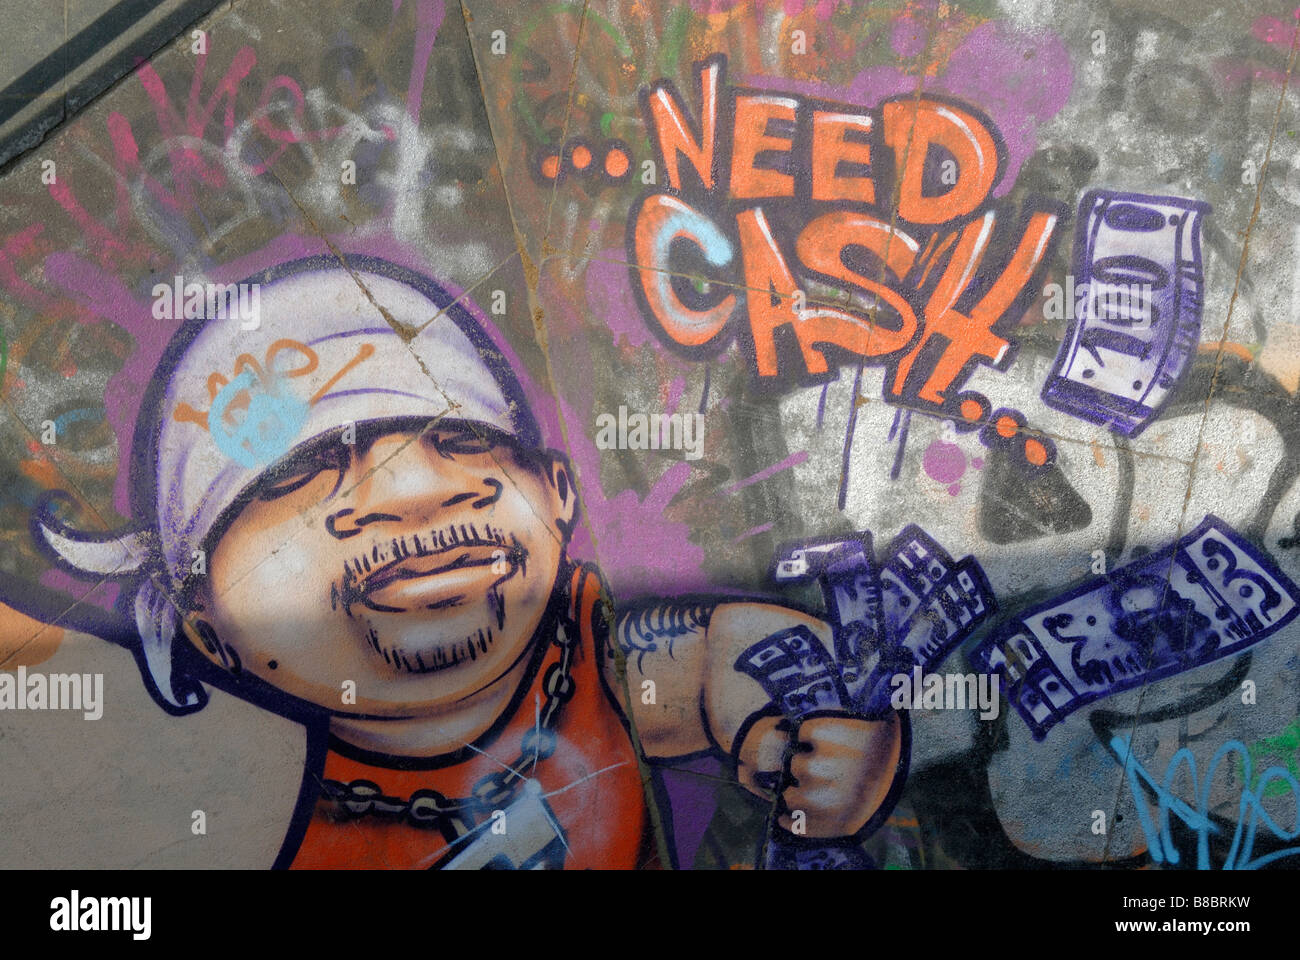 Need Cash: Graffiti of young man throwing around money, Royal Festival Hall skateboard park, South Bank, London Stock Photo